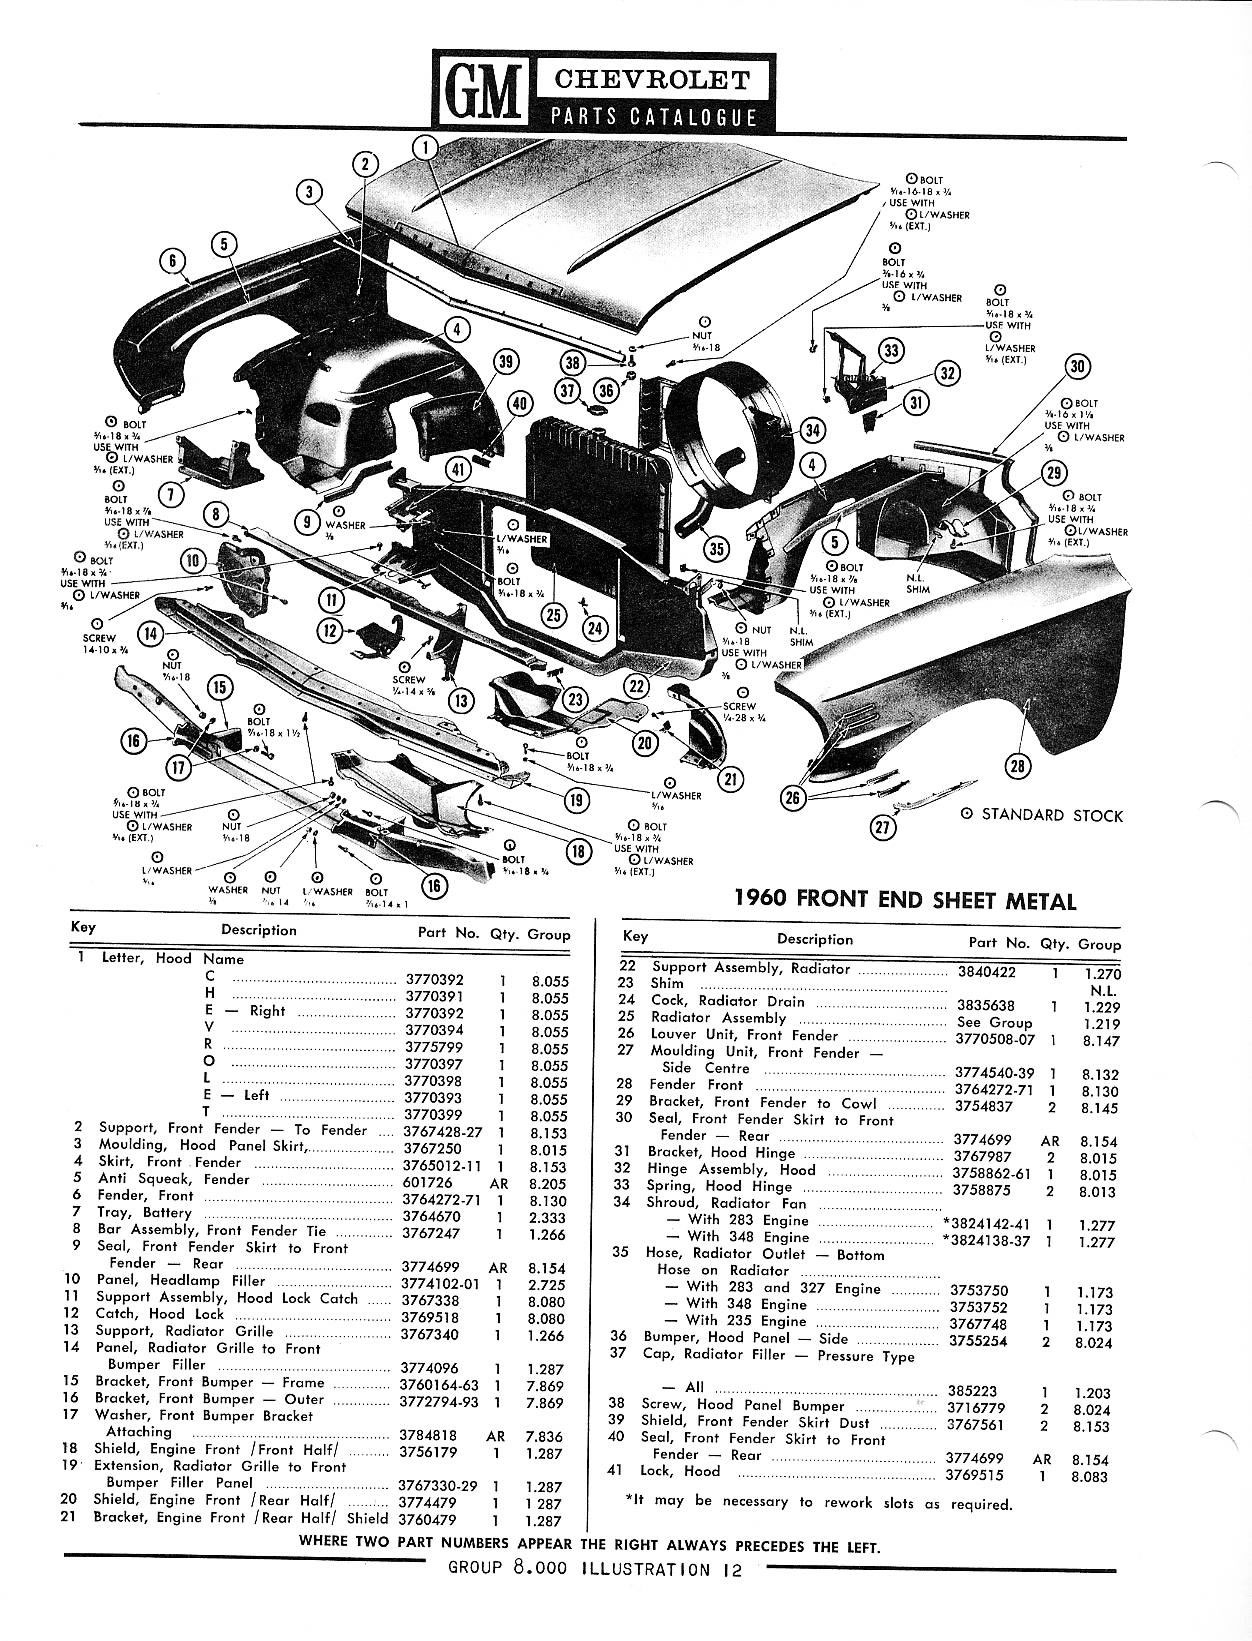 1958-1968 Chevrolet Parts Catalog / Image95.jpg